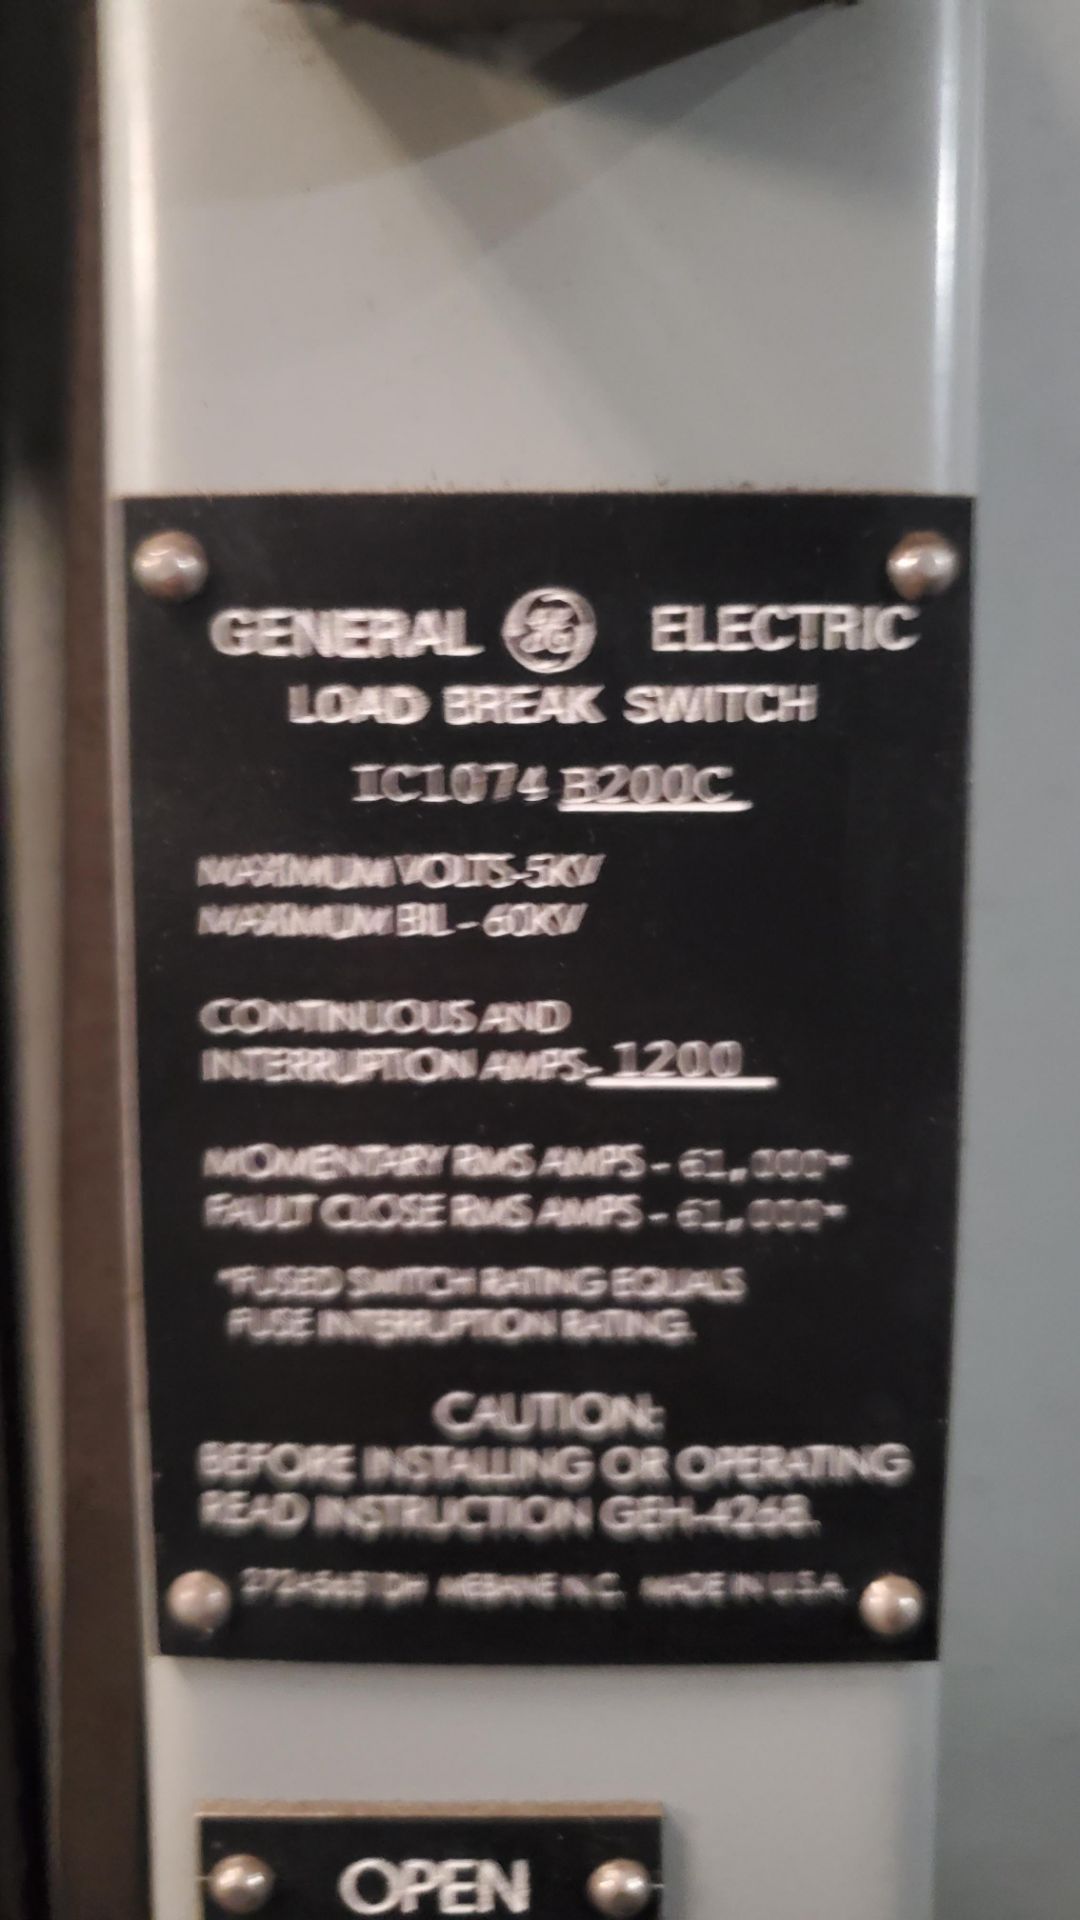 (Lot) General Electric Limit Amp Load Break Switch IA1074 B200C, 5KV, 1200A w/ (2) CRB110L00302BR AC - Image 5 of 6